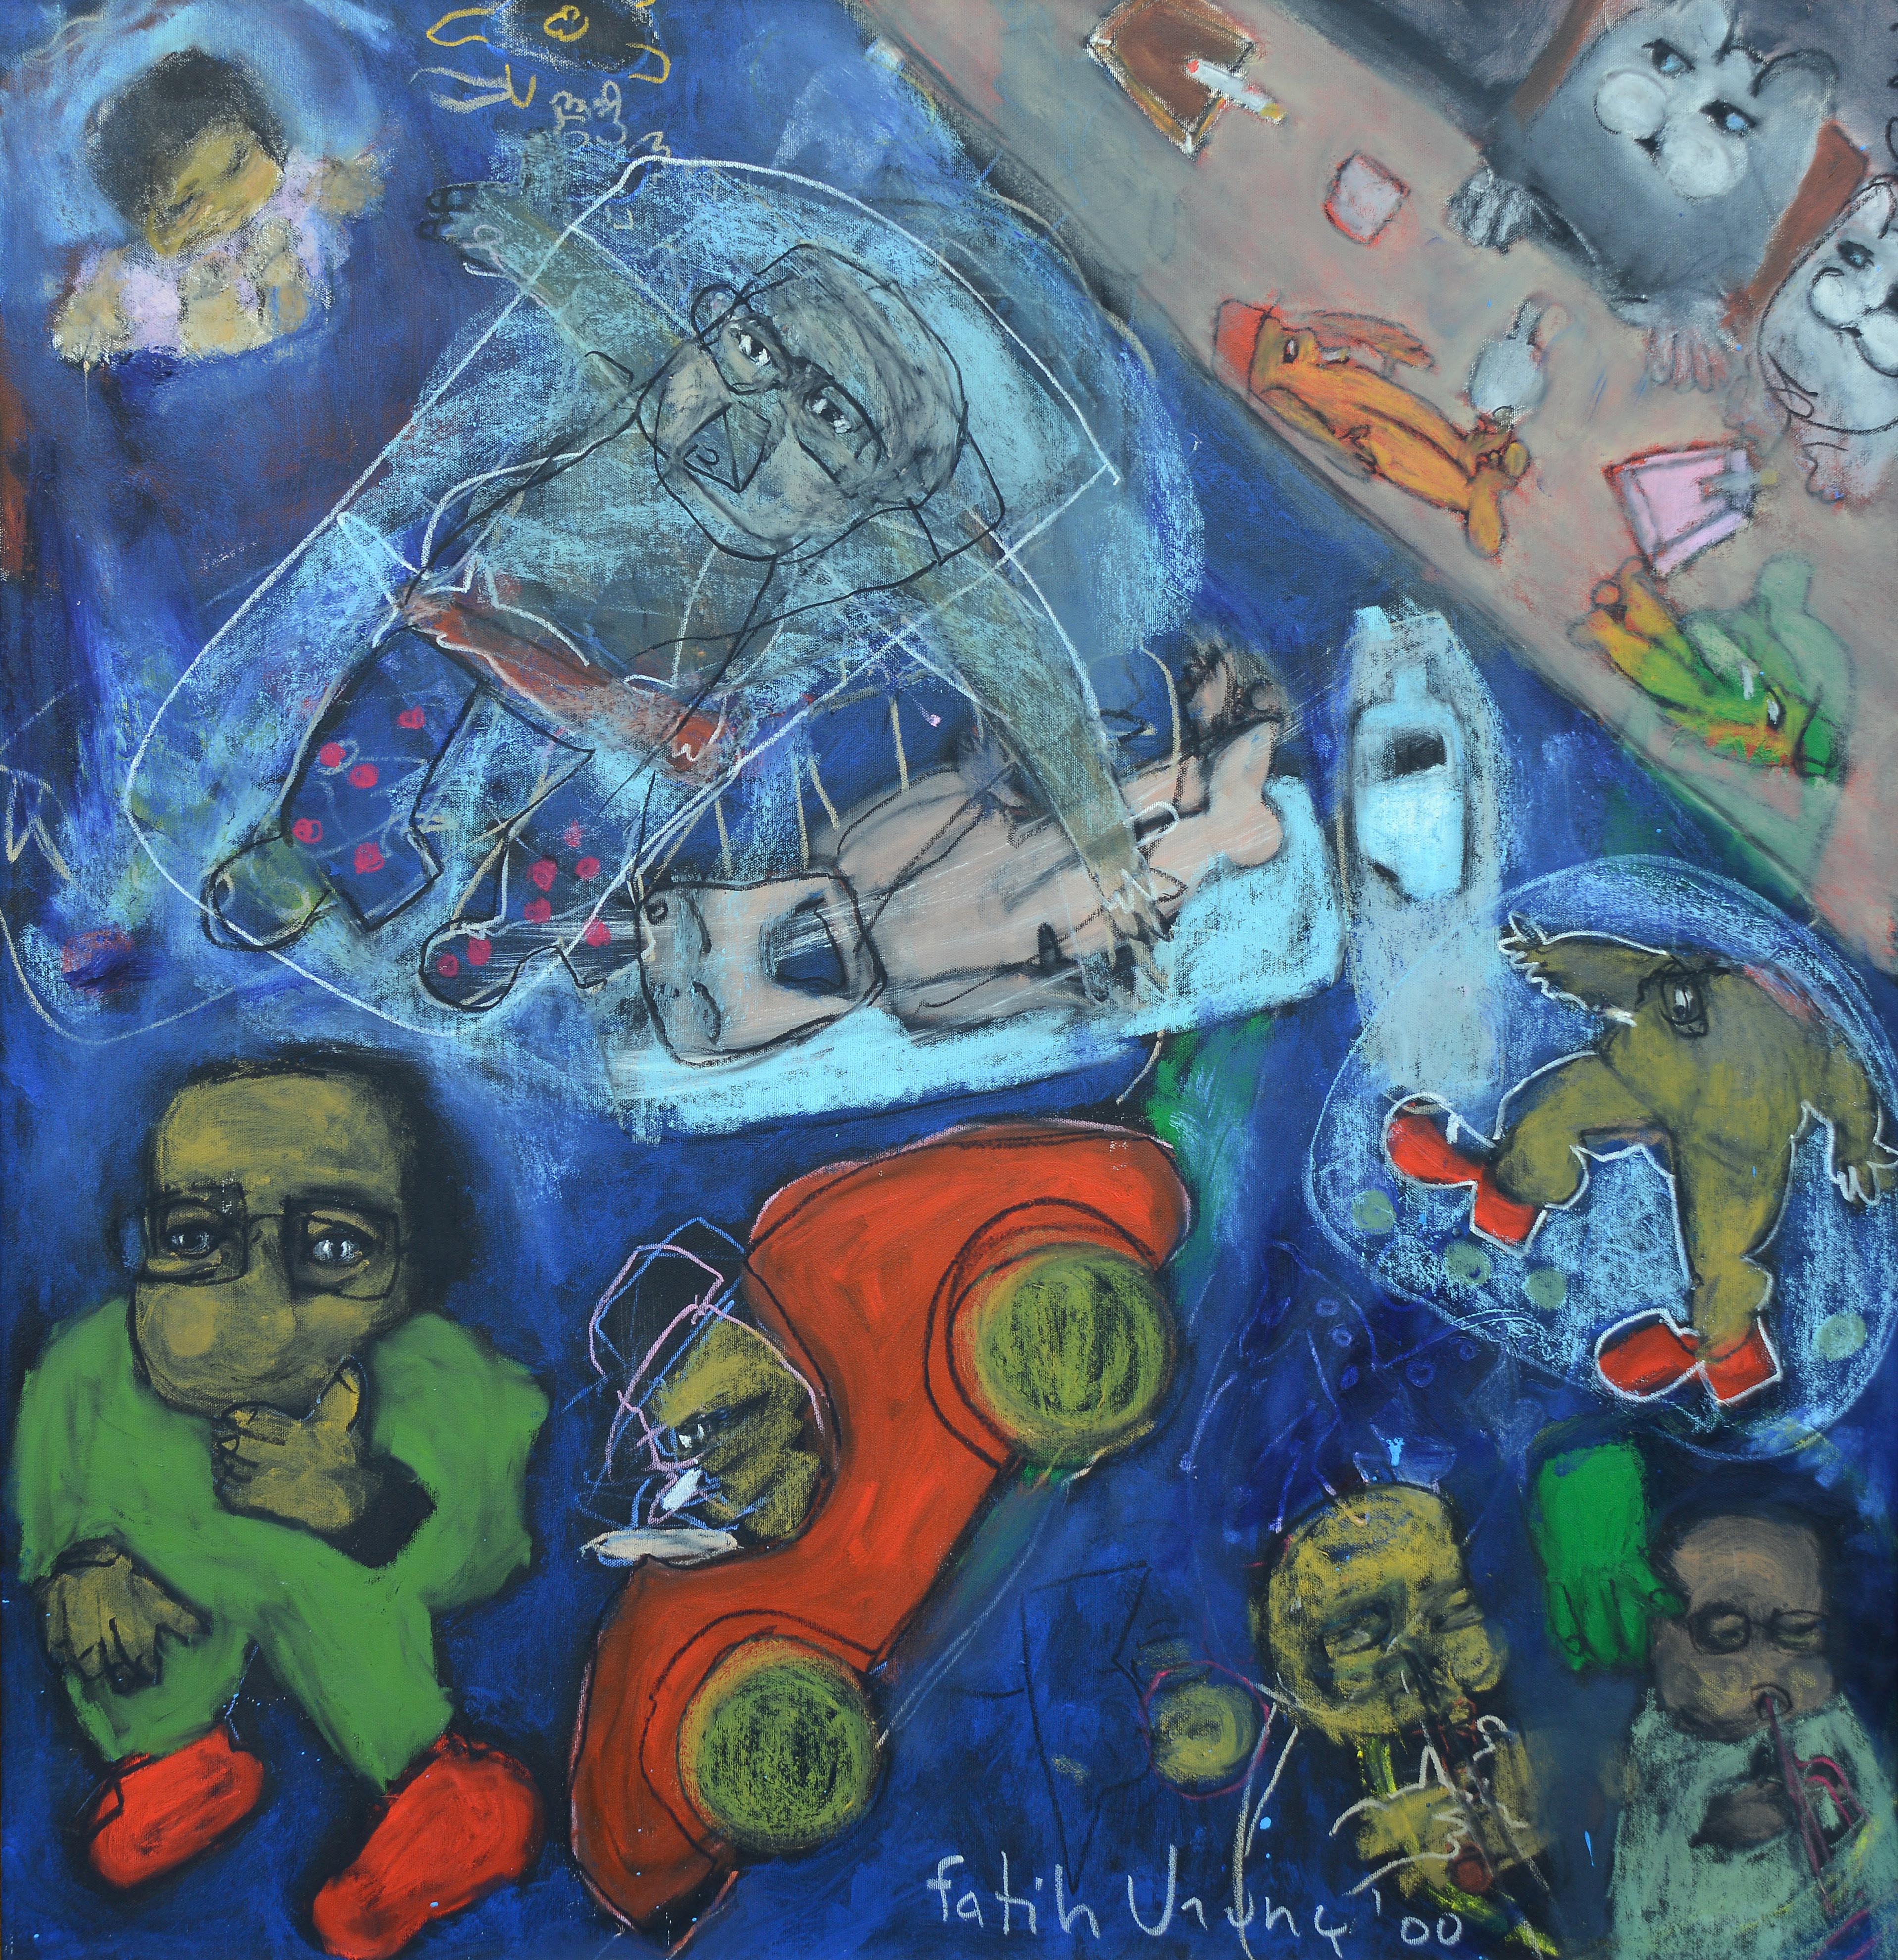 İsimsiz- Untitled, 2000, Tuval üzerine yağlıboya- Oil on canvas, 113x108 cm